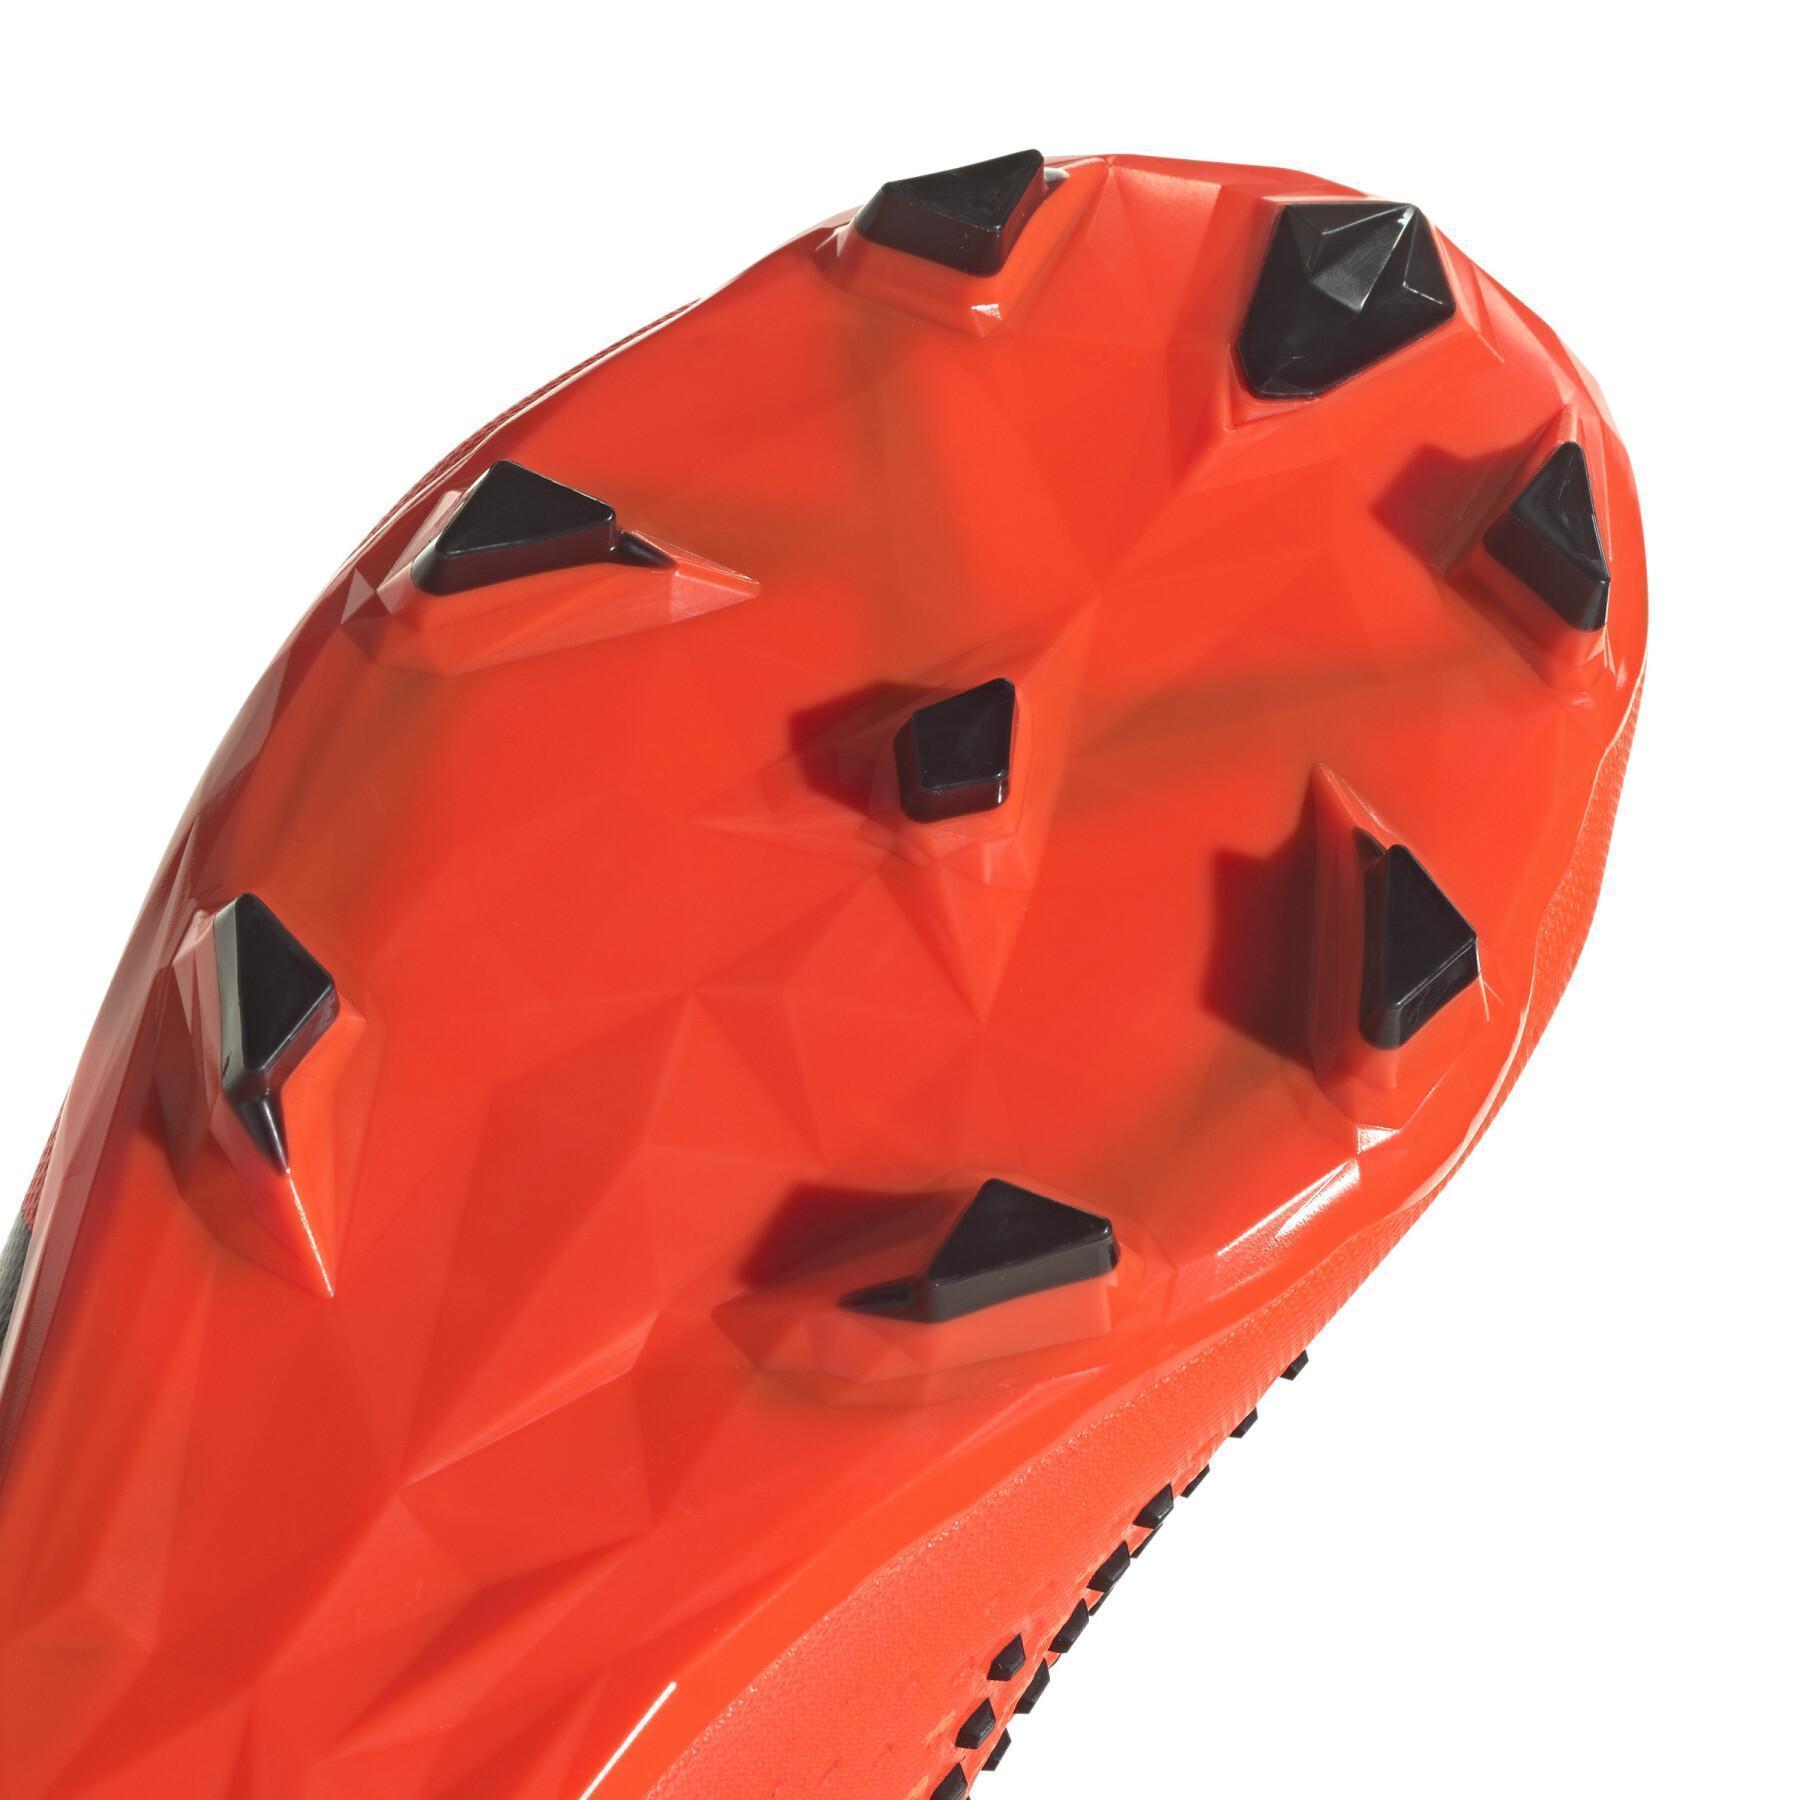 Scarpe da calcio adidas Predator Accuracy.2 FG Heatspawn Pack